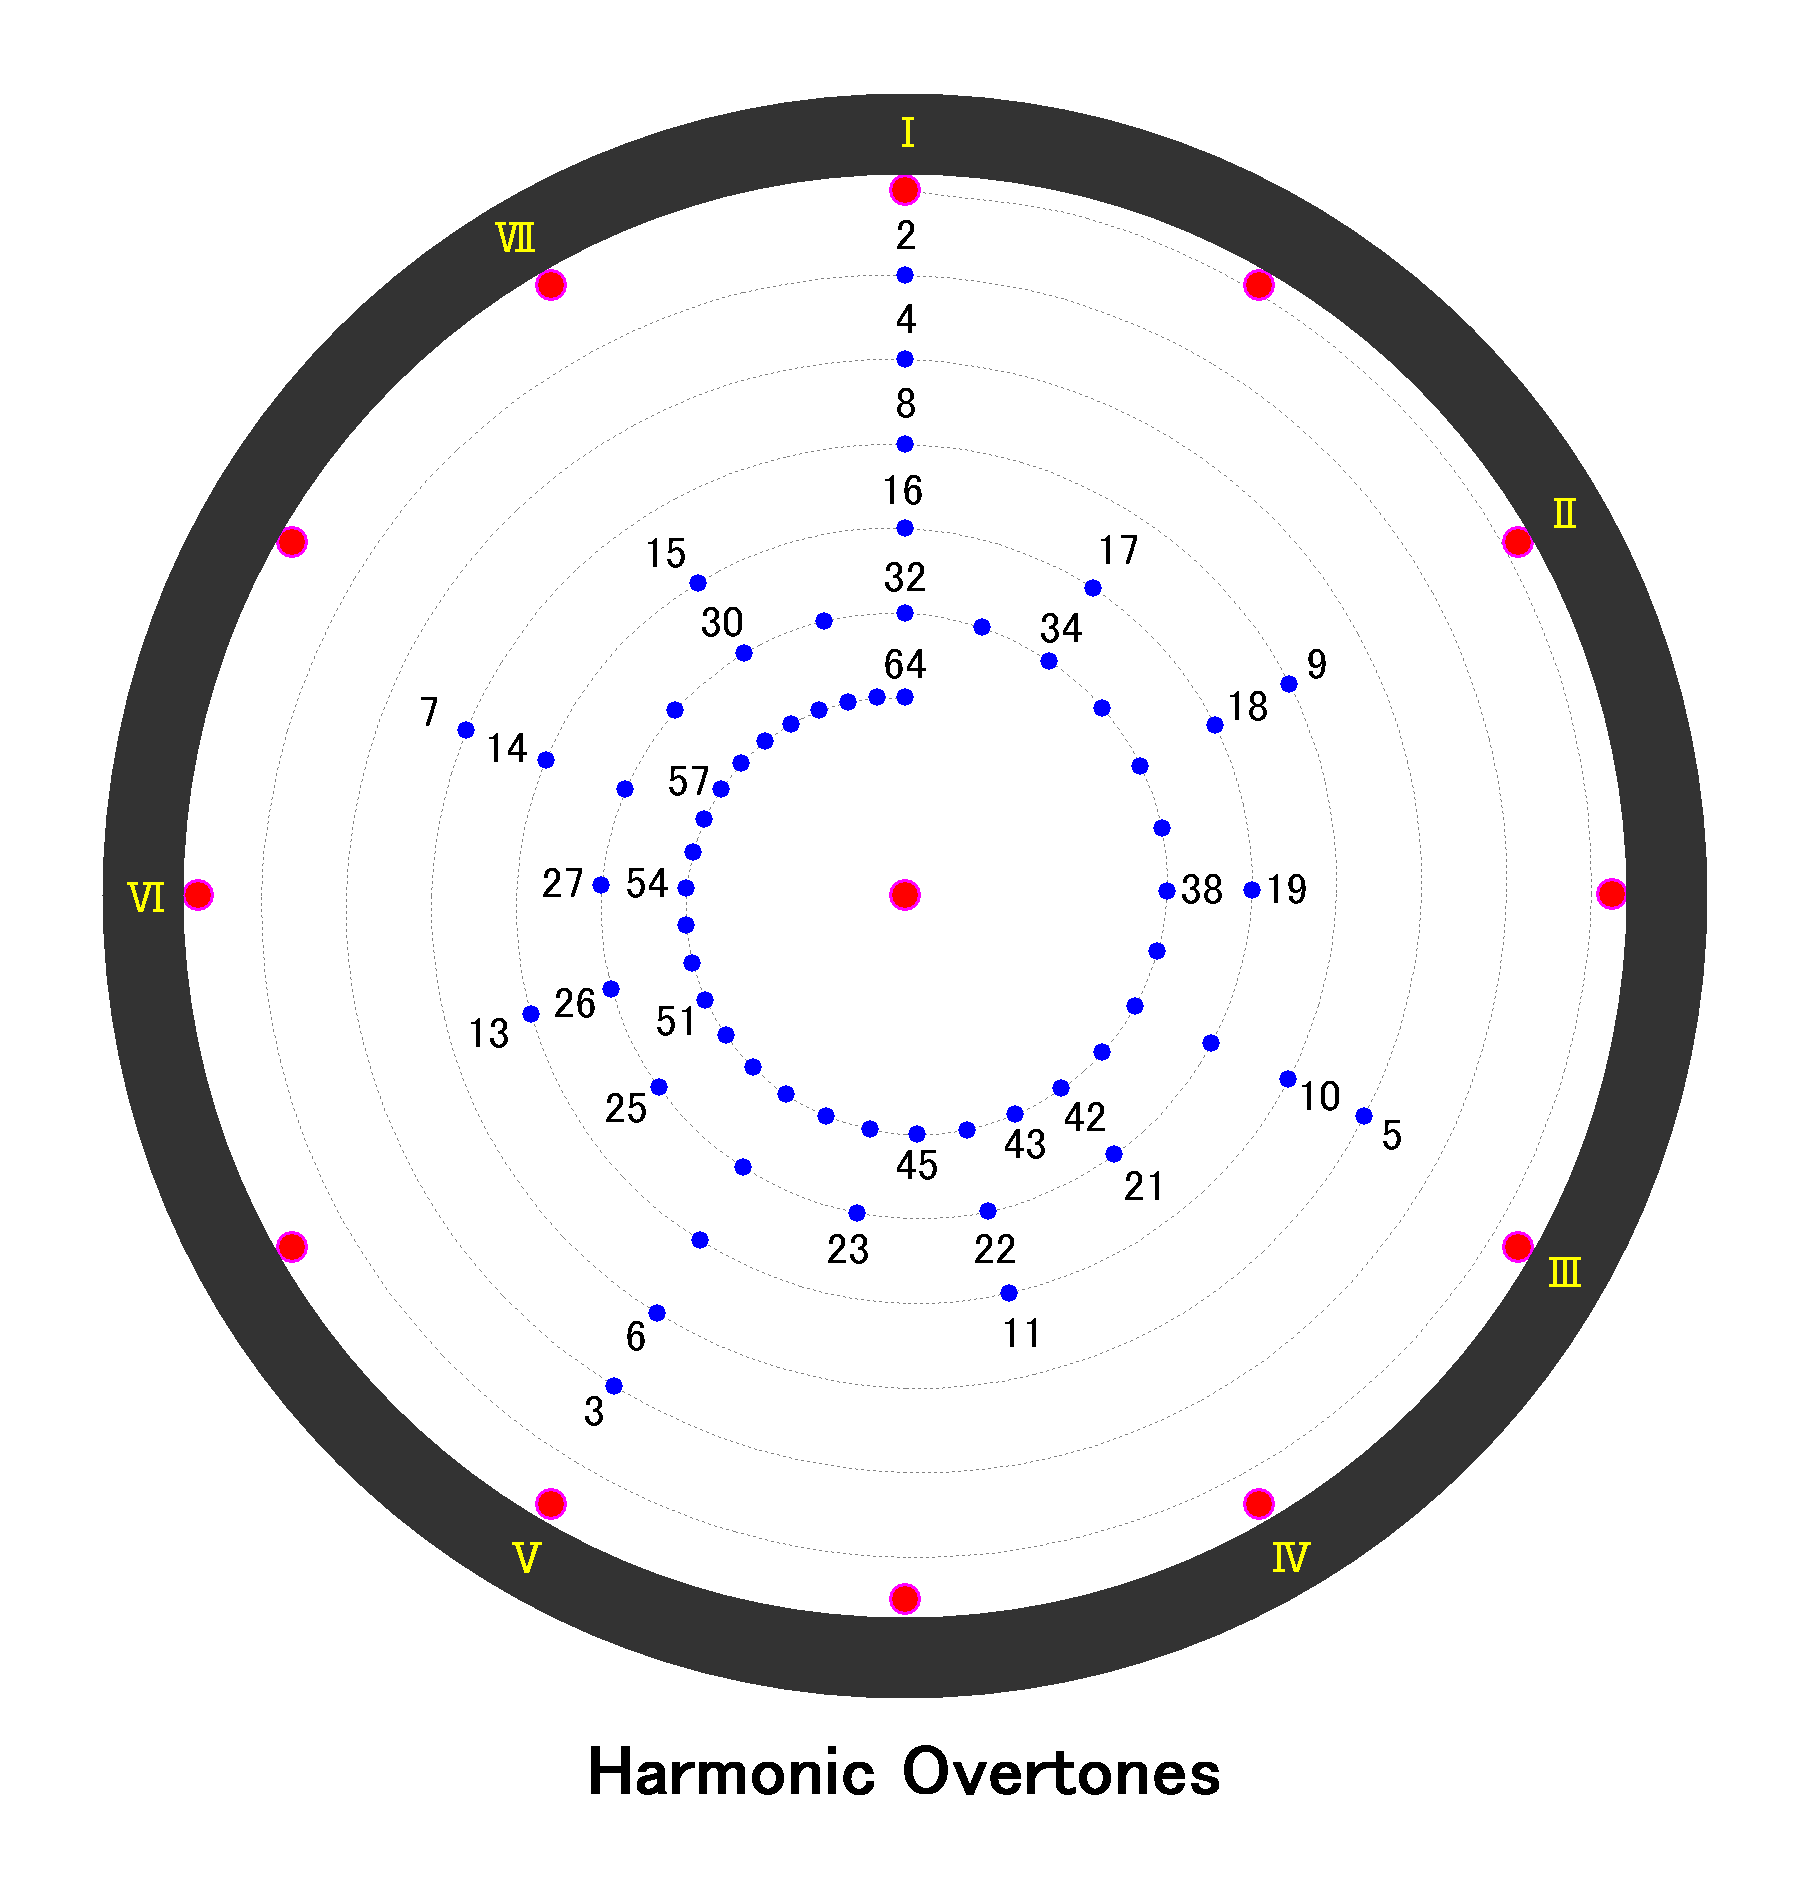 https://upload.wikimedia.org/wikipedia/commons/b/b5/Harmonic_Overtones_4_Music.png